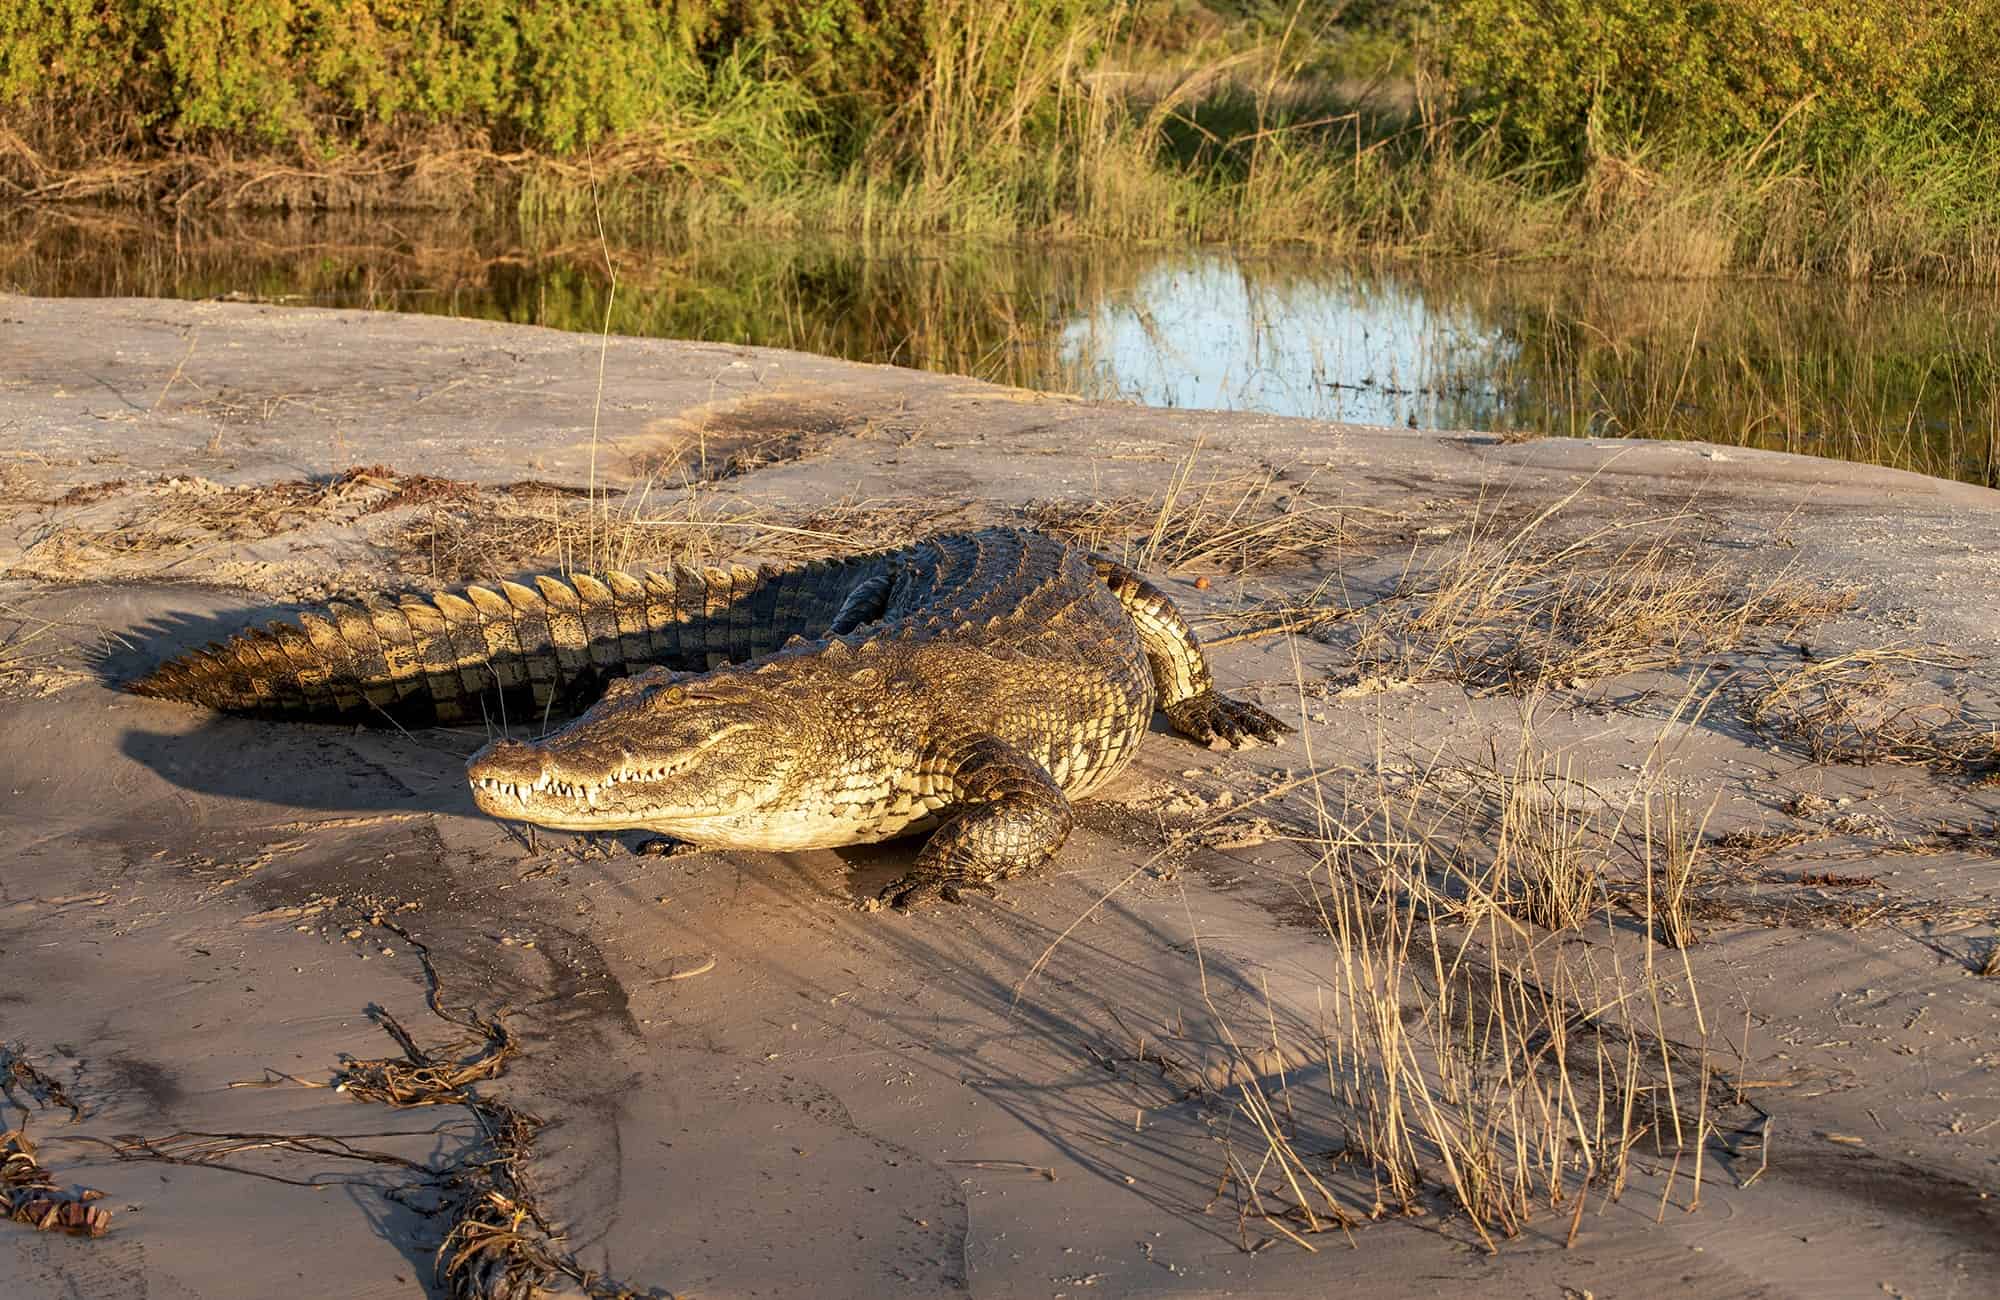 Crocodile on Riverbank